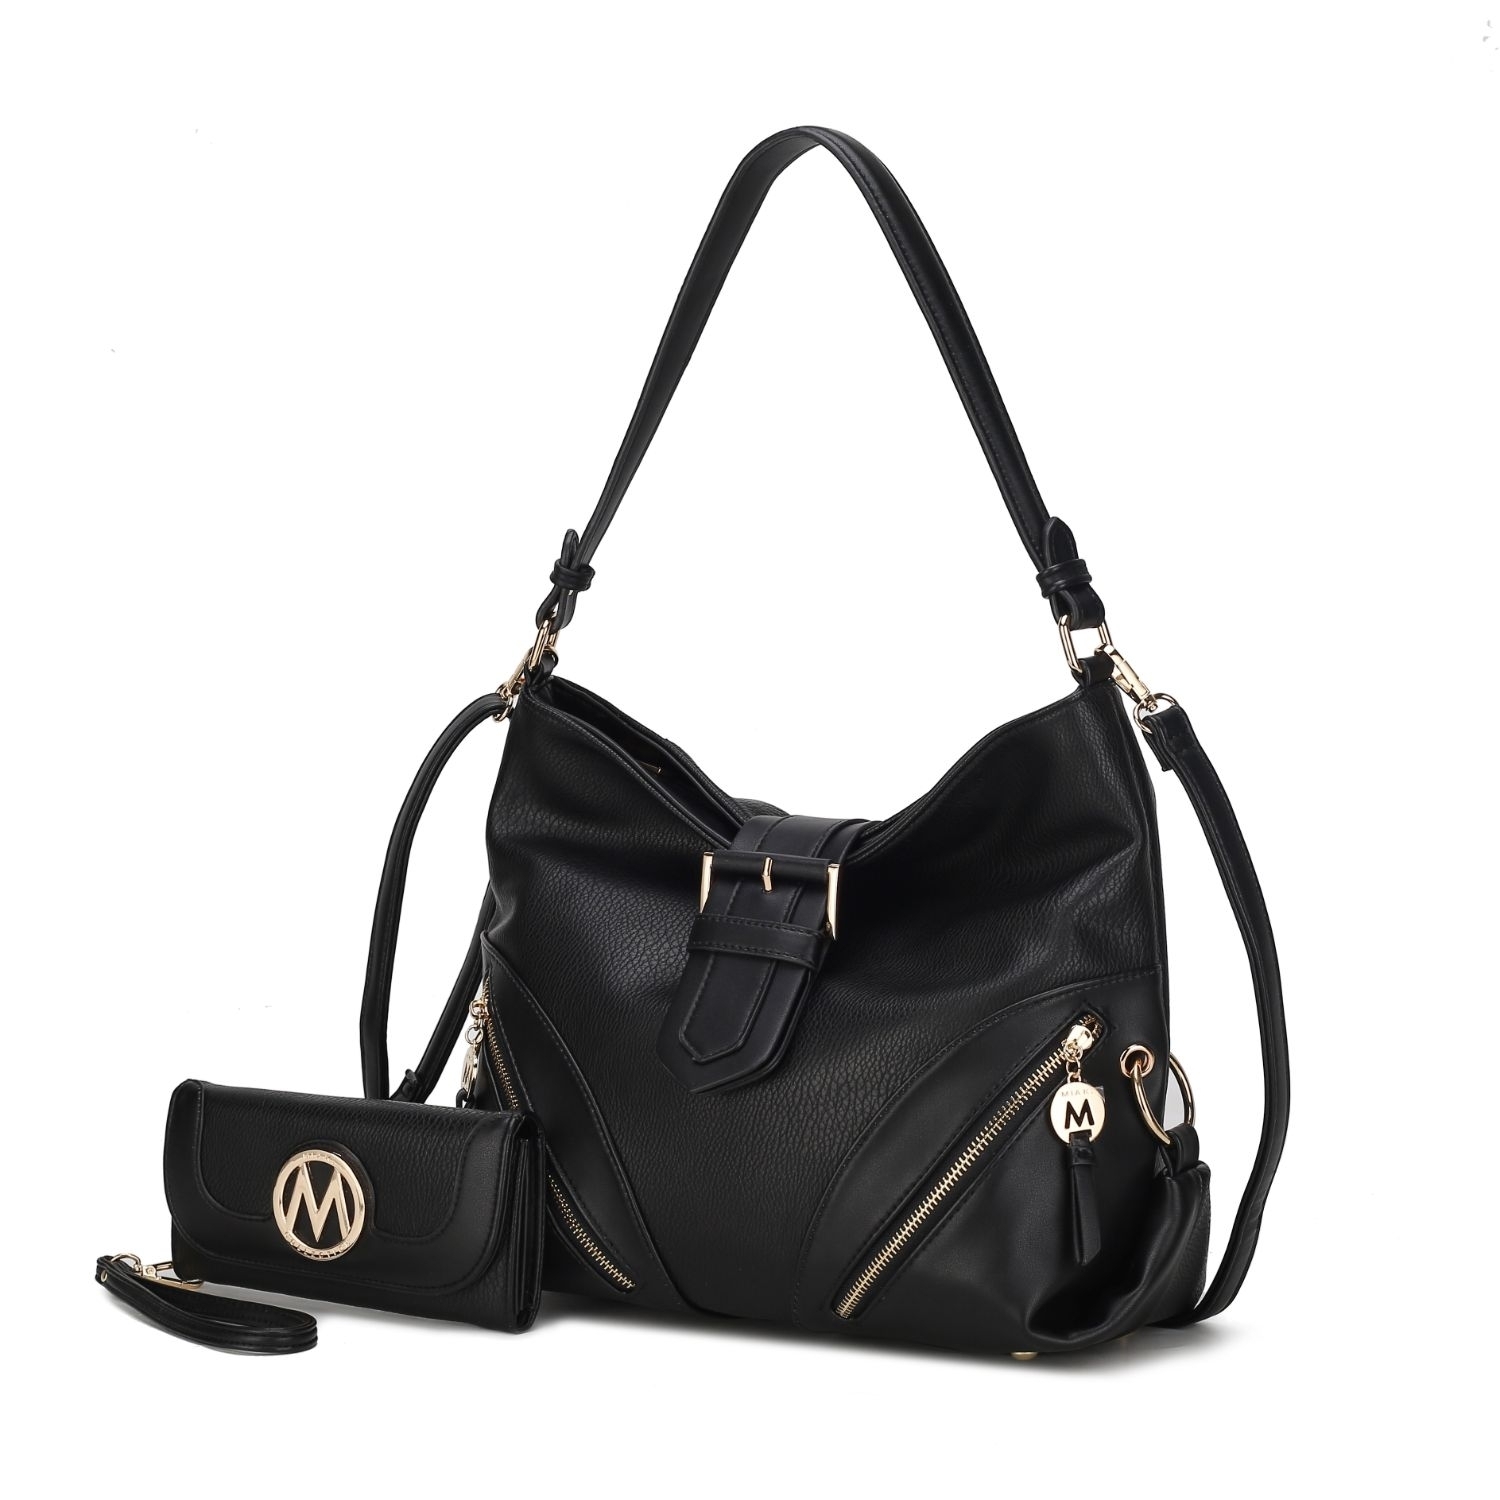 MKF Collection Rafaela Shoulder Handbag By Mia K - Mustard